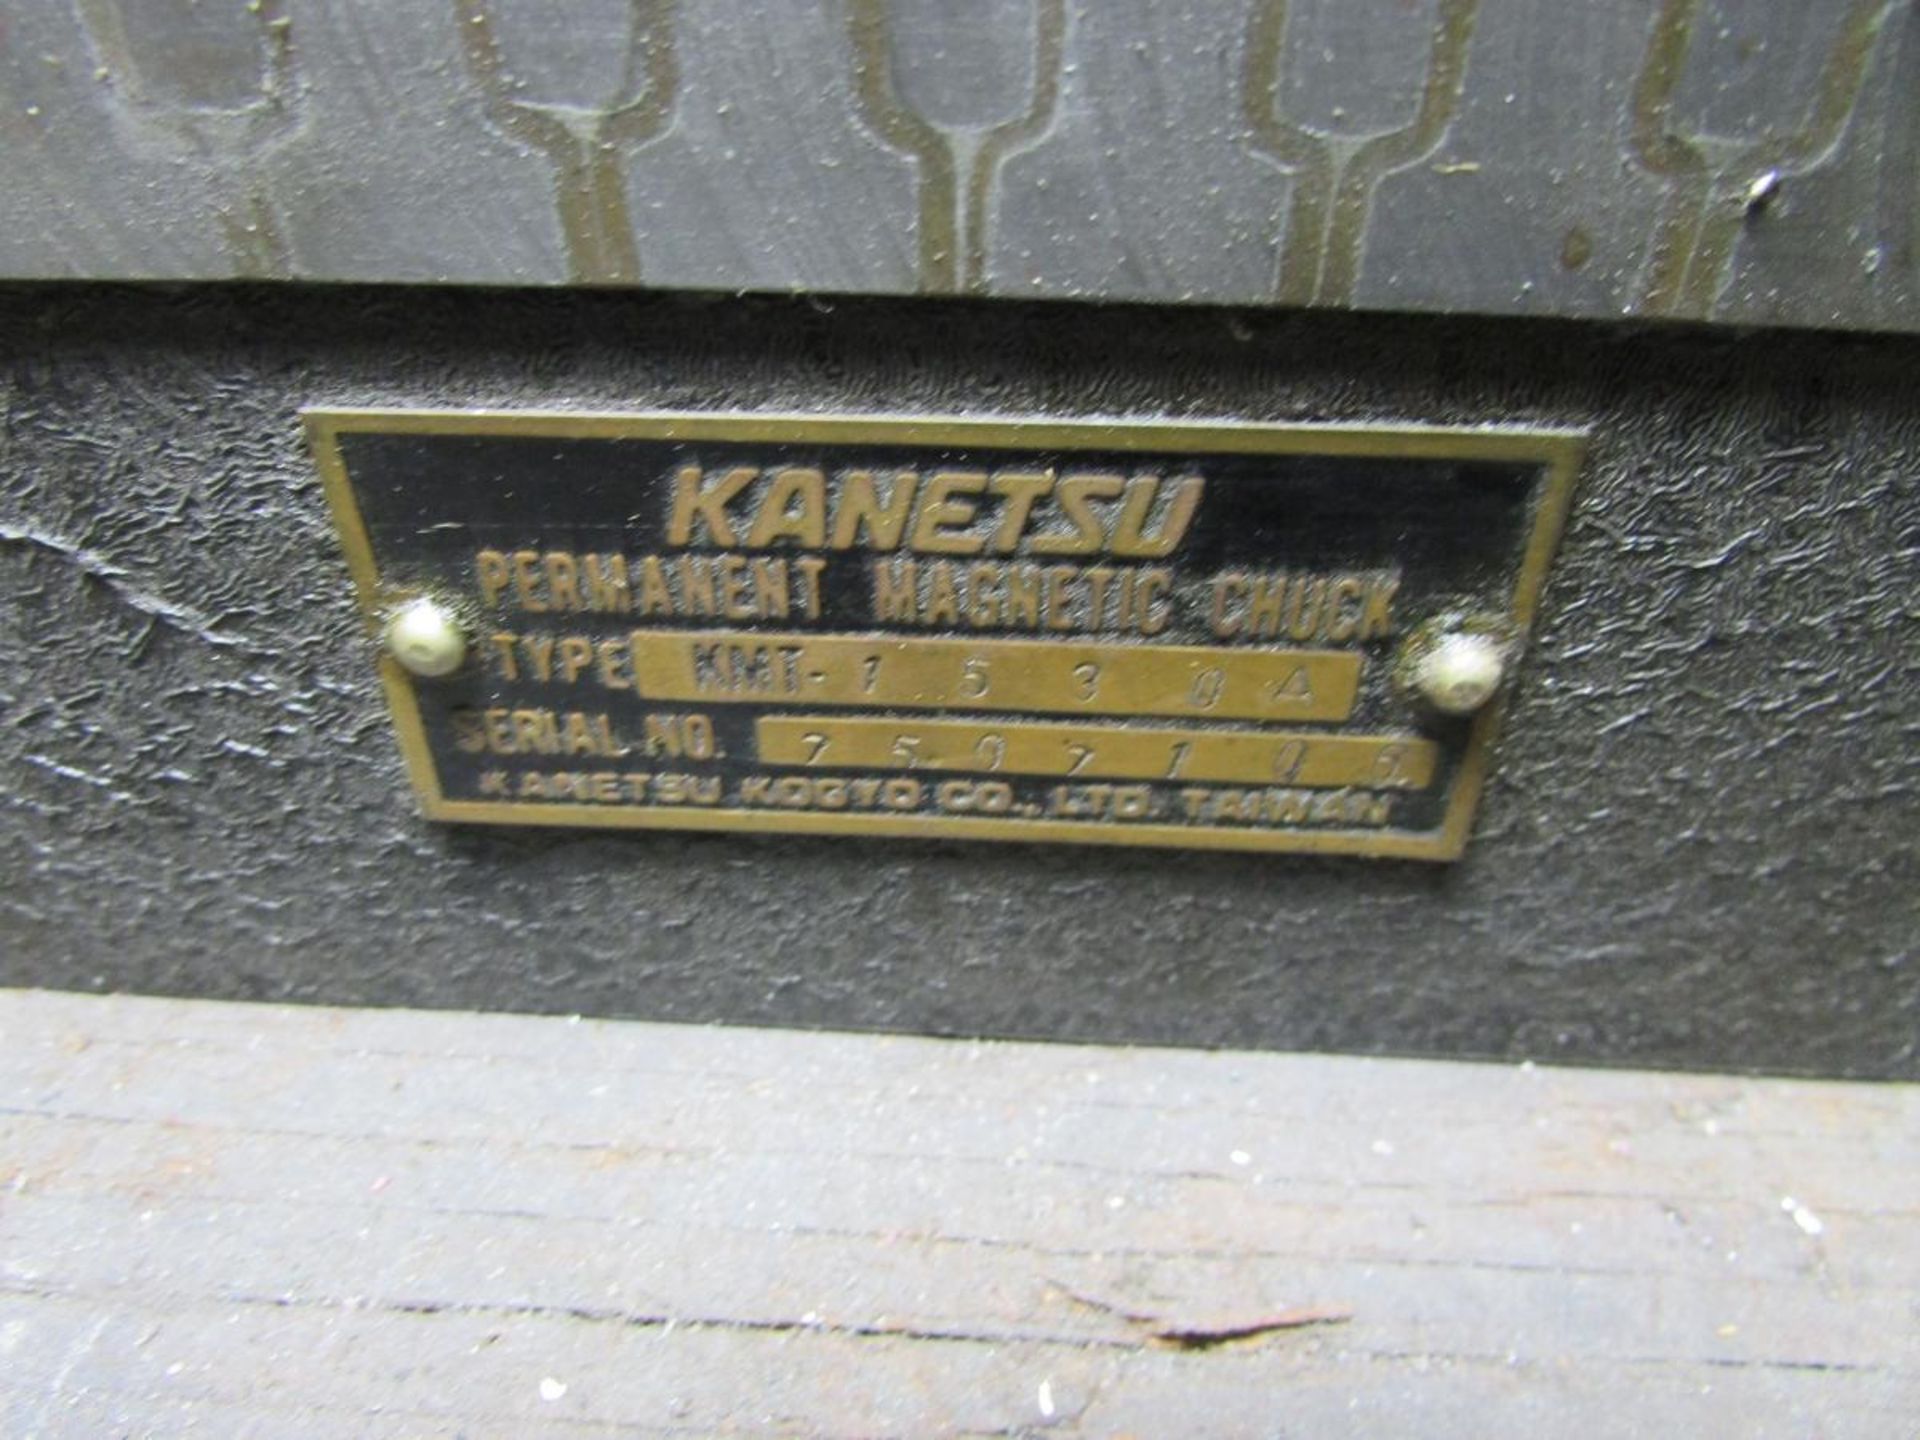 KANETSU 6"X12" PERMANENT MAGNETIC CHUCK - Image 5 of 5